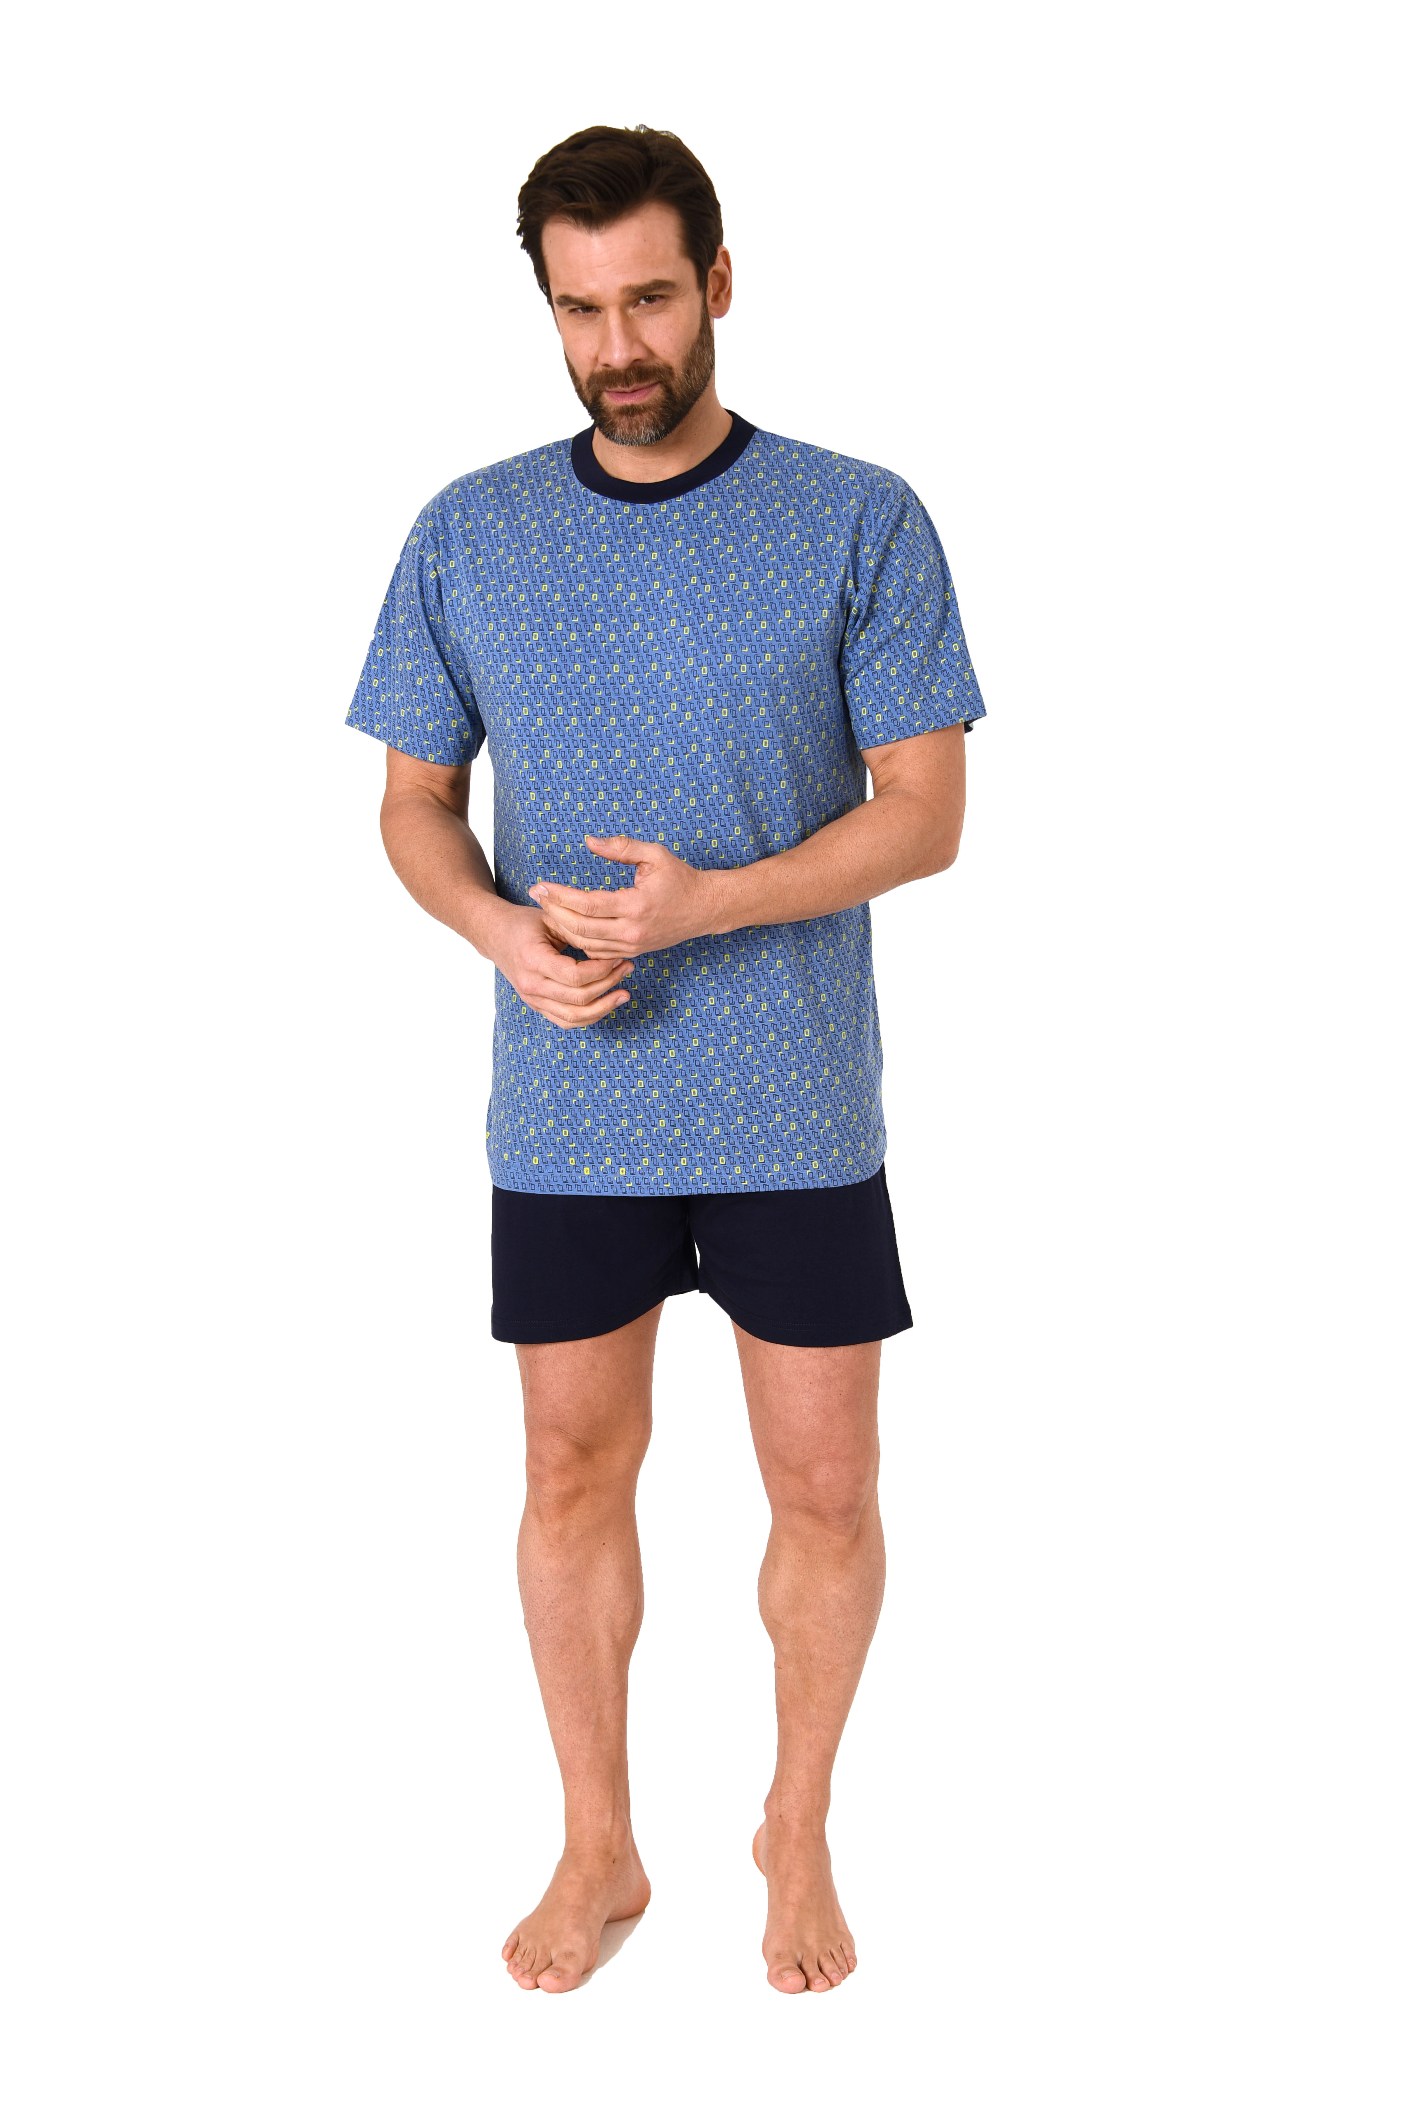 Edler Herren kurzarm Schlafanzug Shorty Pyjama mit Minimal-Print - 112 105 10 714